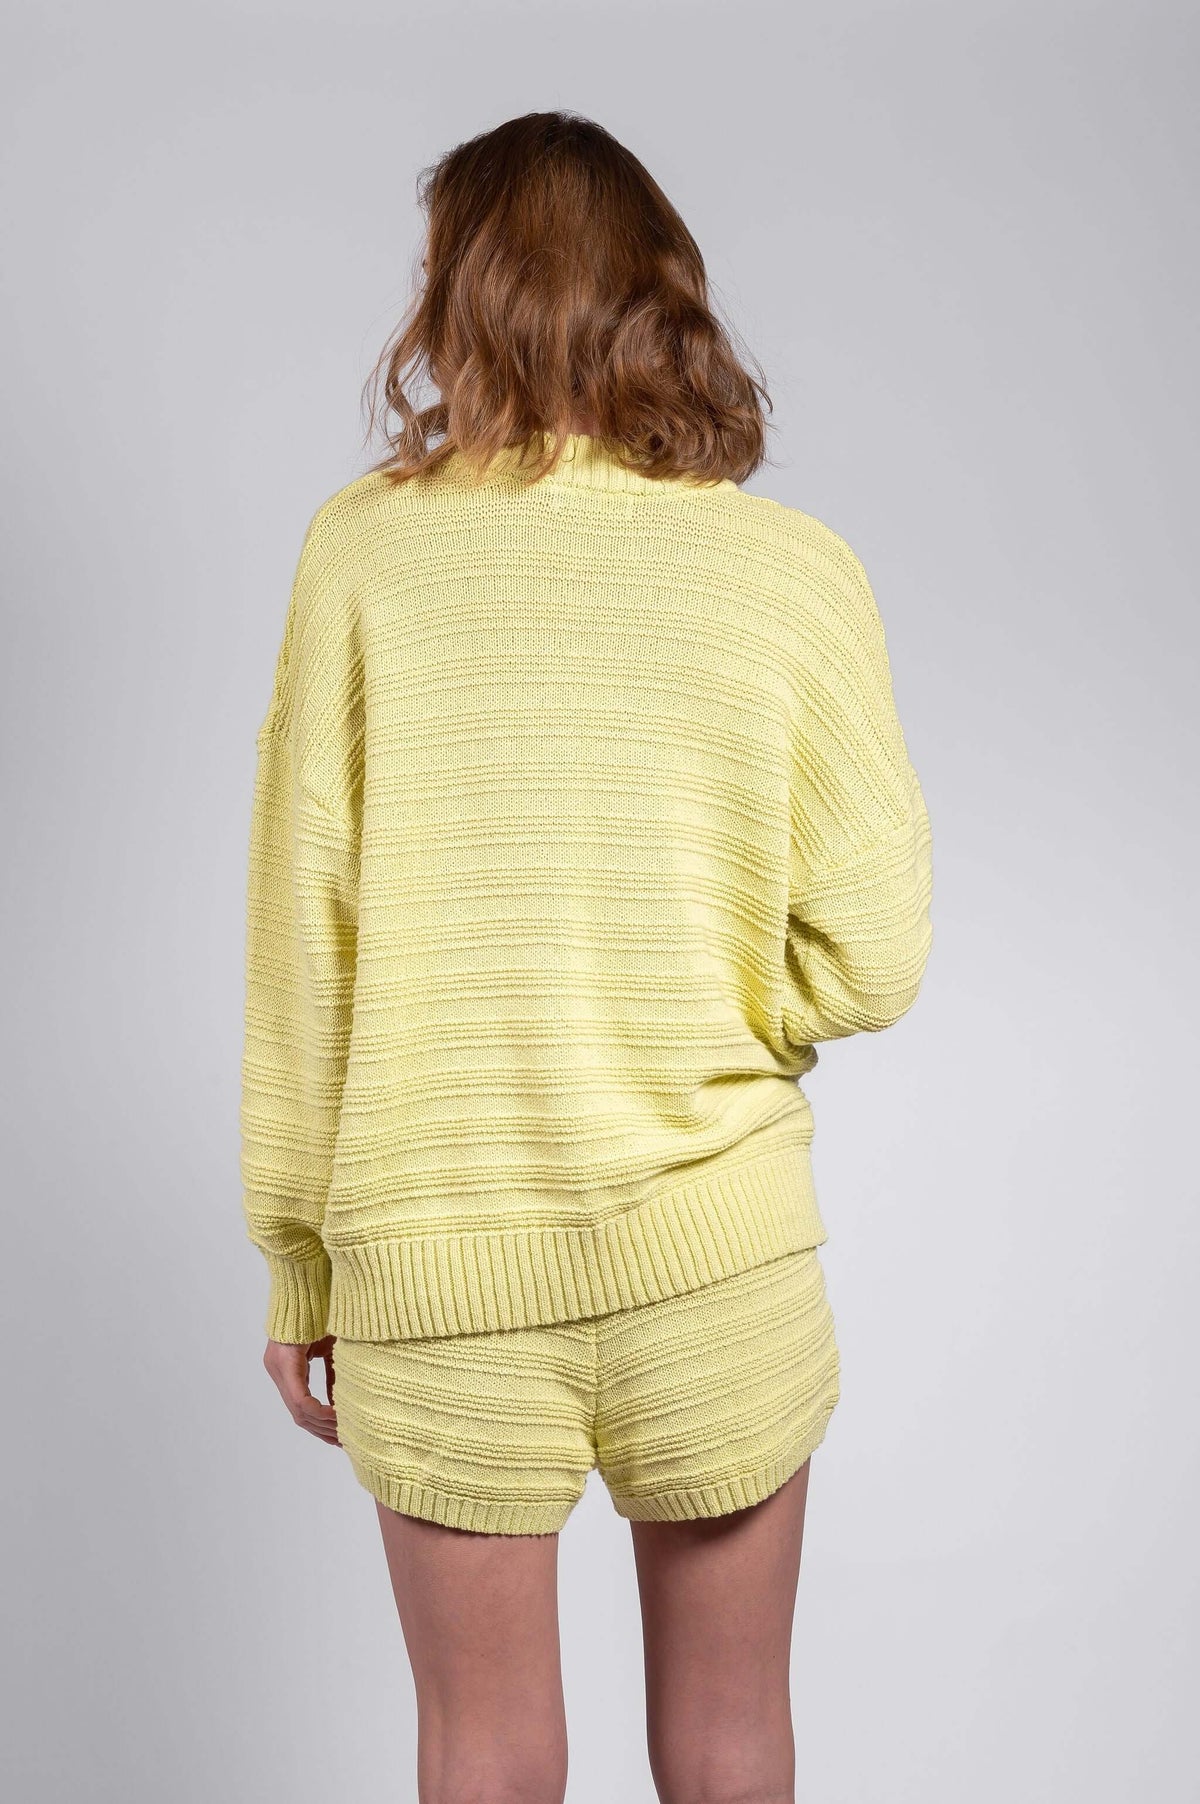 Cool Jade Sweater (BCI) - LATTELOVE Co.